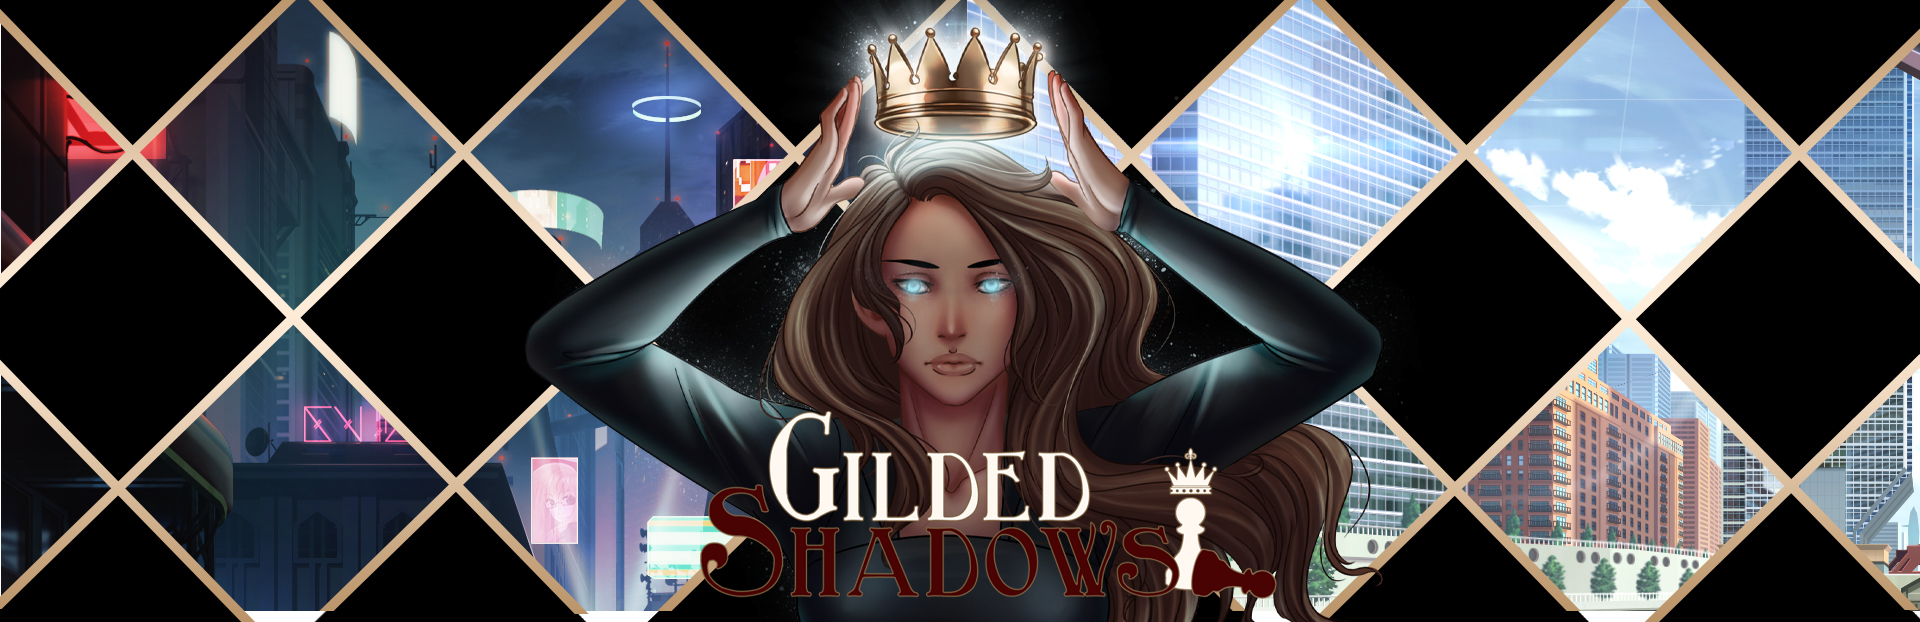 Gilded Shadows Demo